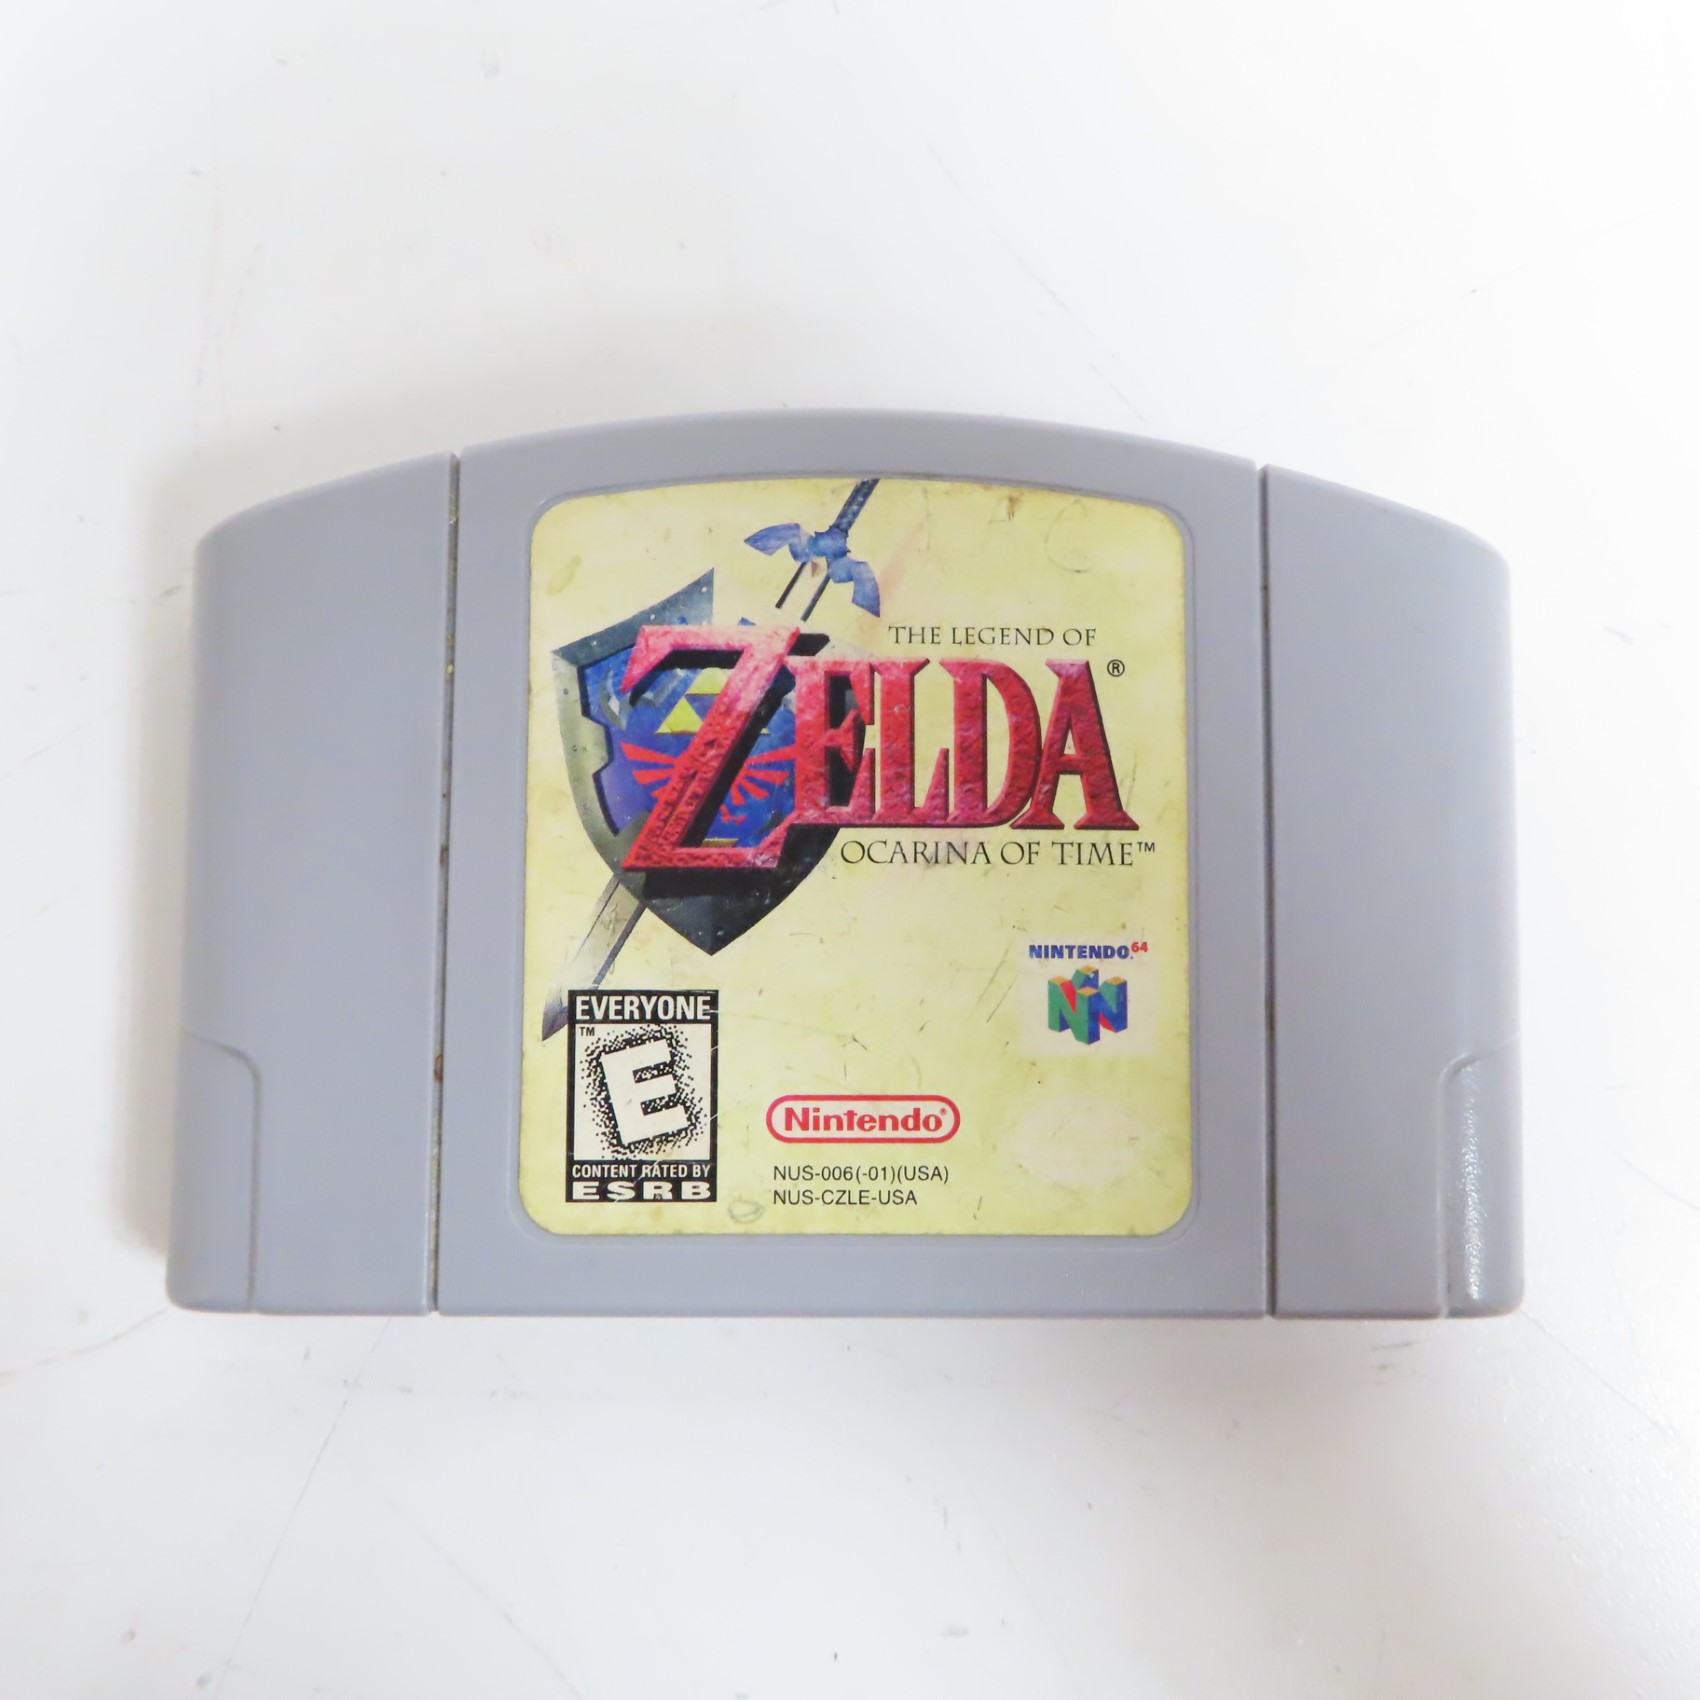 Legend of Zelda Ocarina of Time for Nintendo 64 